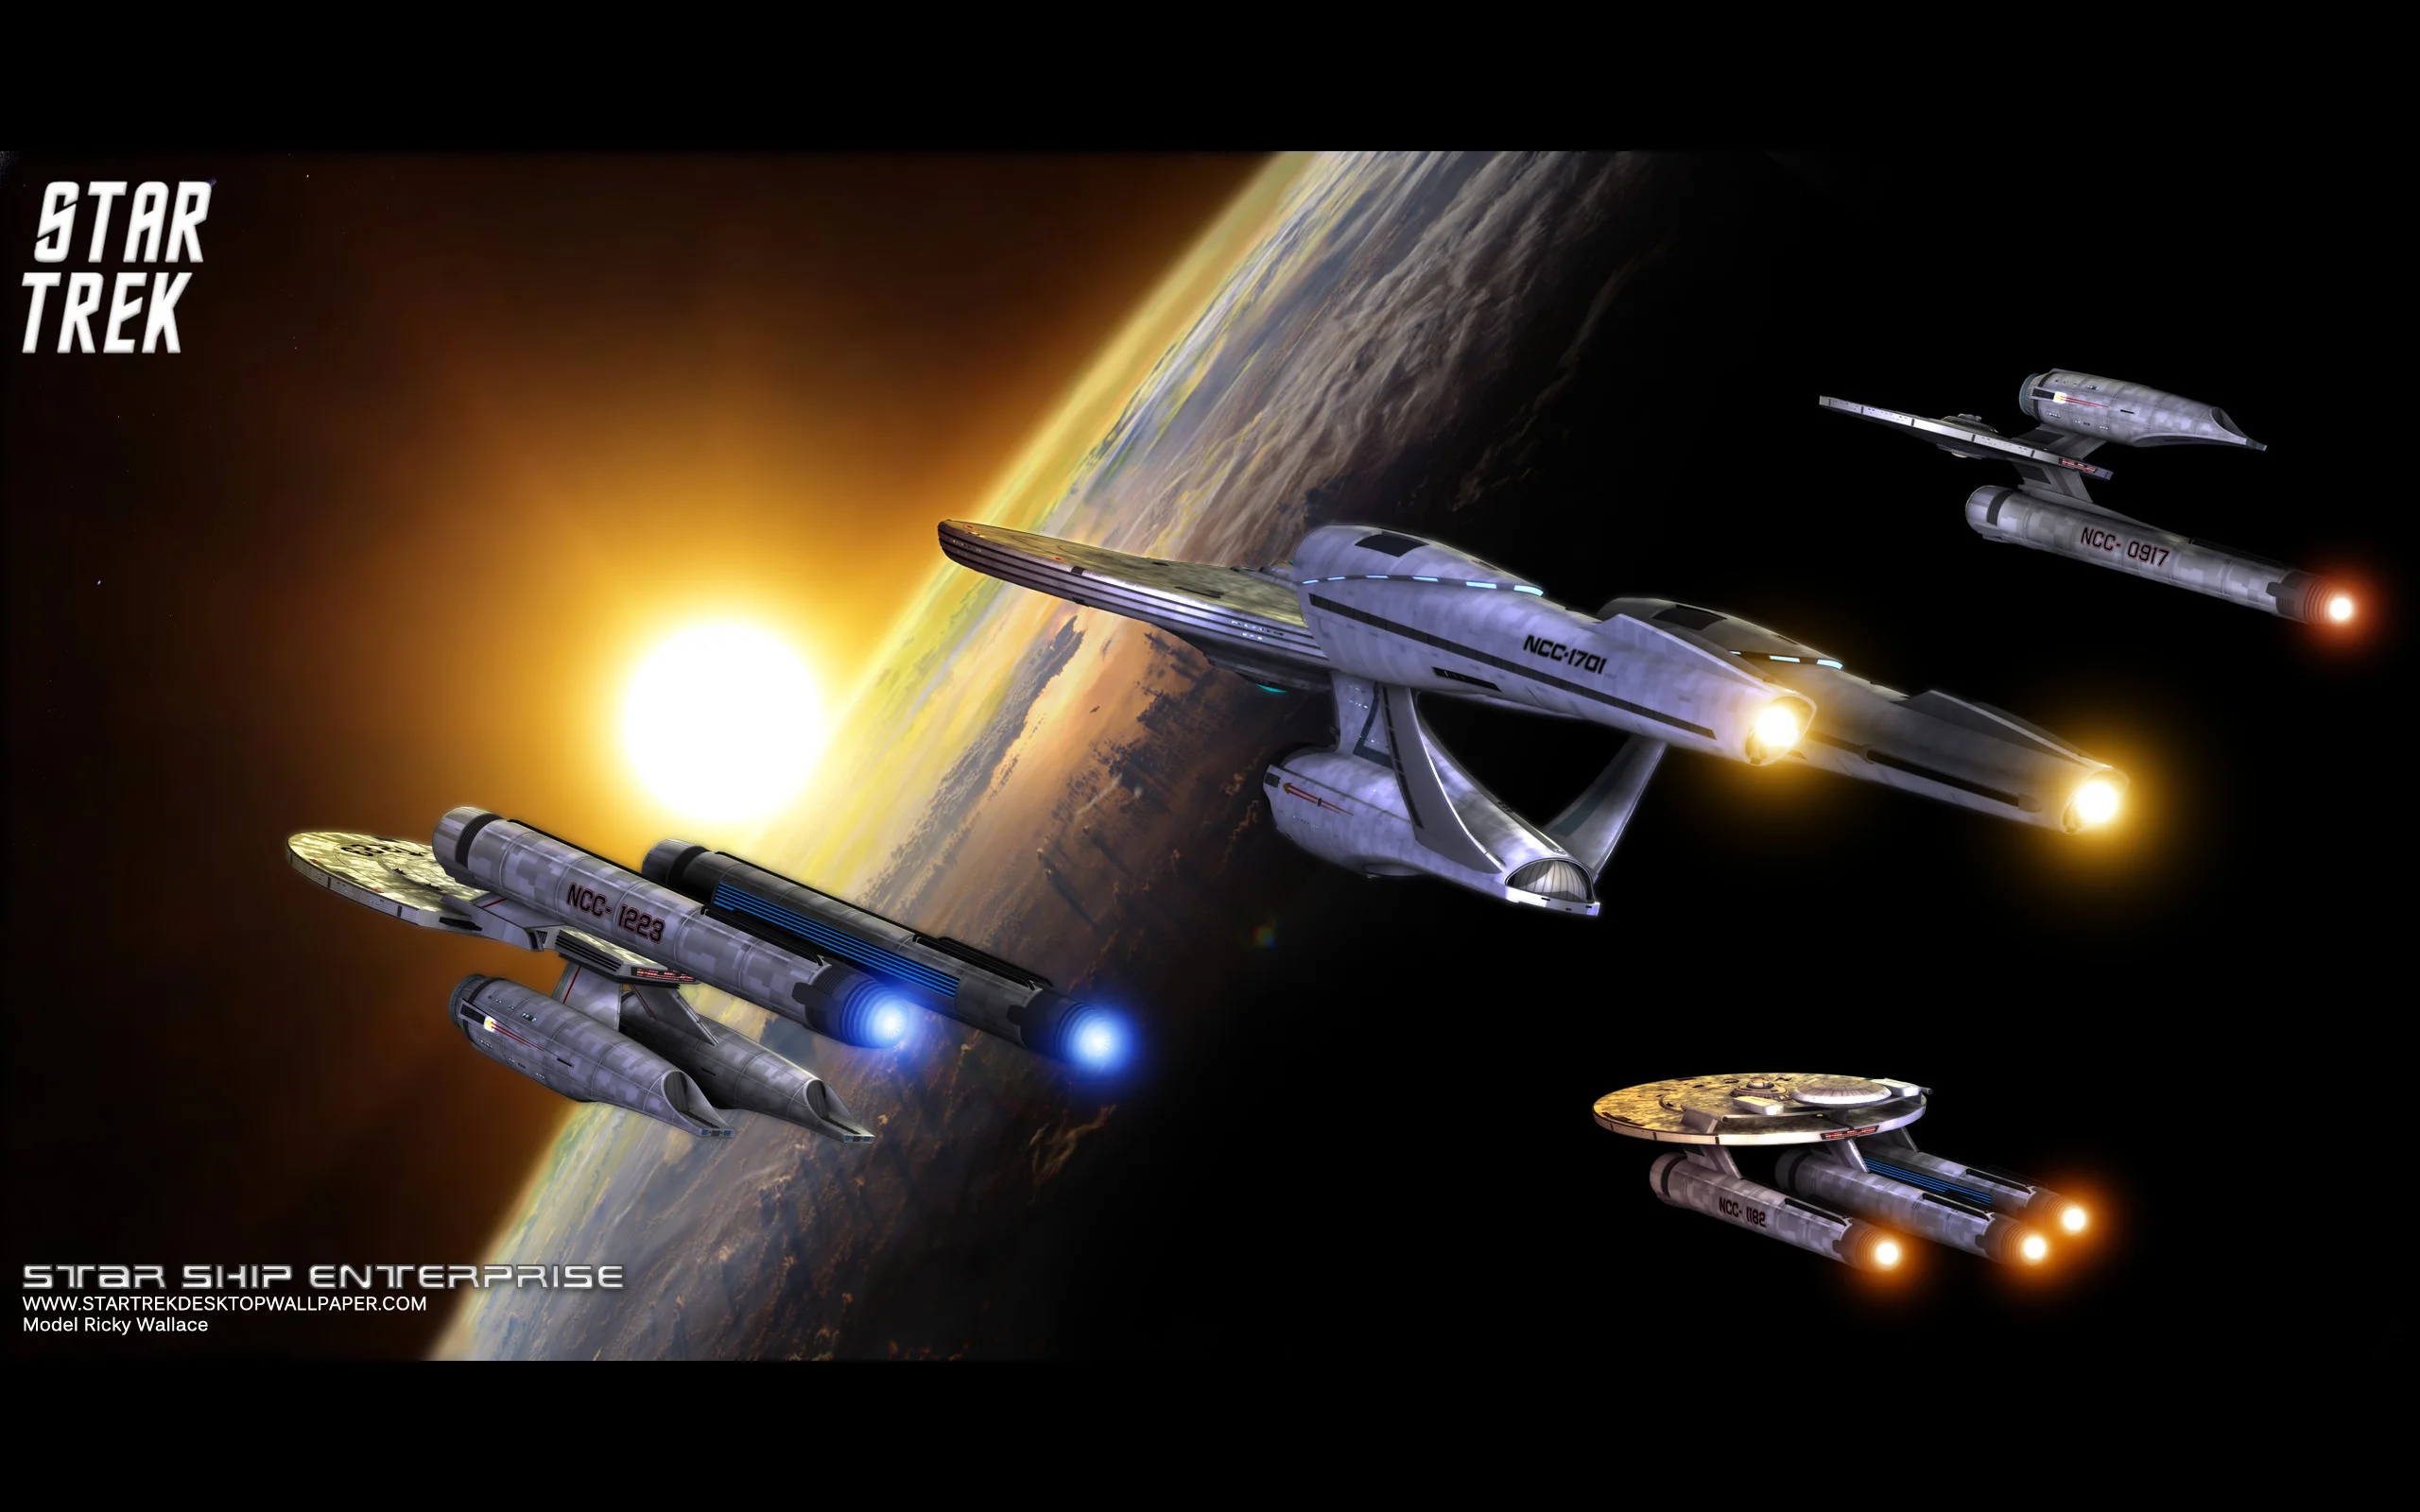 Star Trek Star Ship Enterprise – free Star Trek computer desktop wallpaper, pictures,